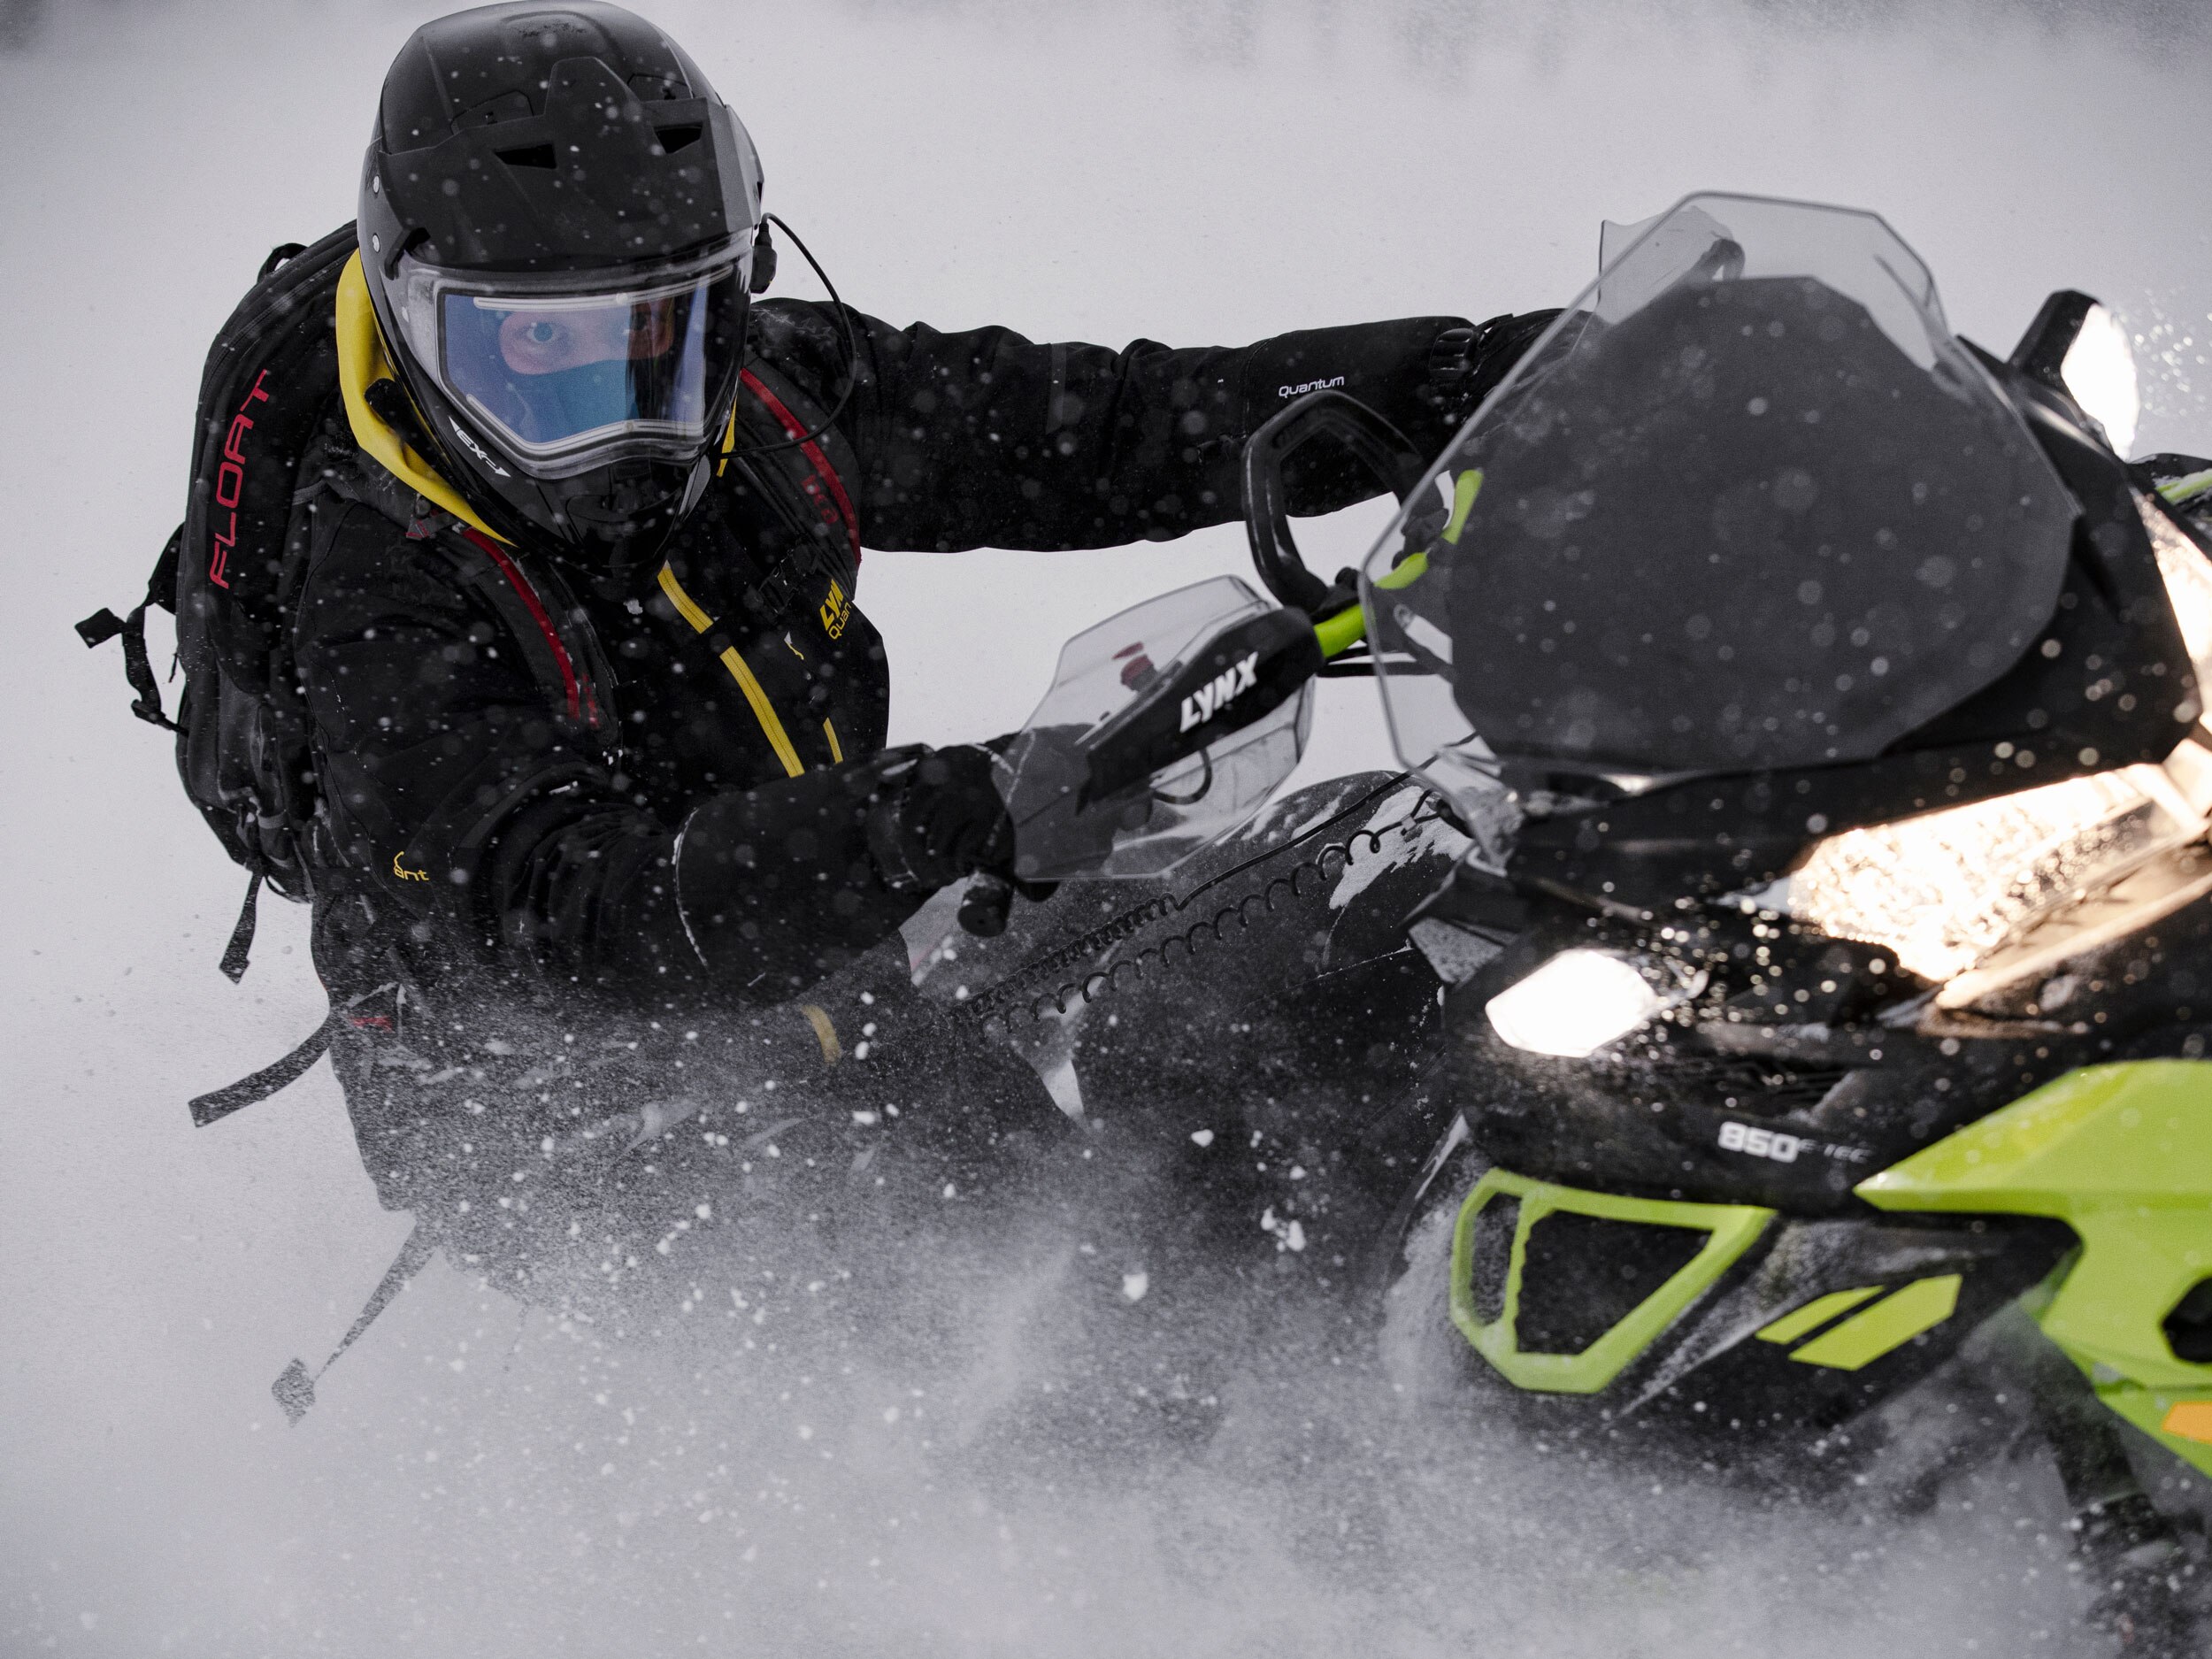 Lynx rider wearing techno wear on deep snow riding